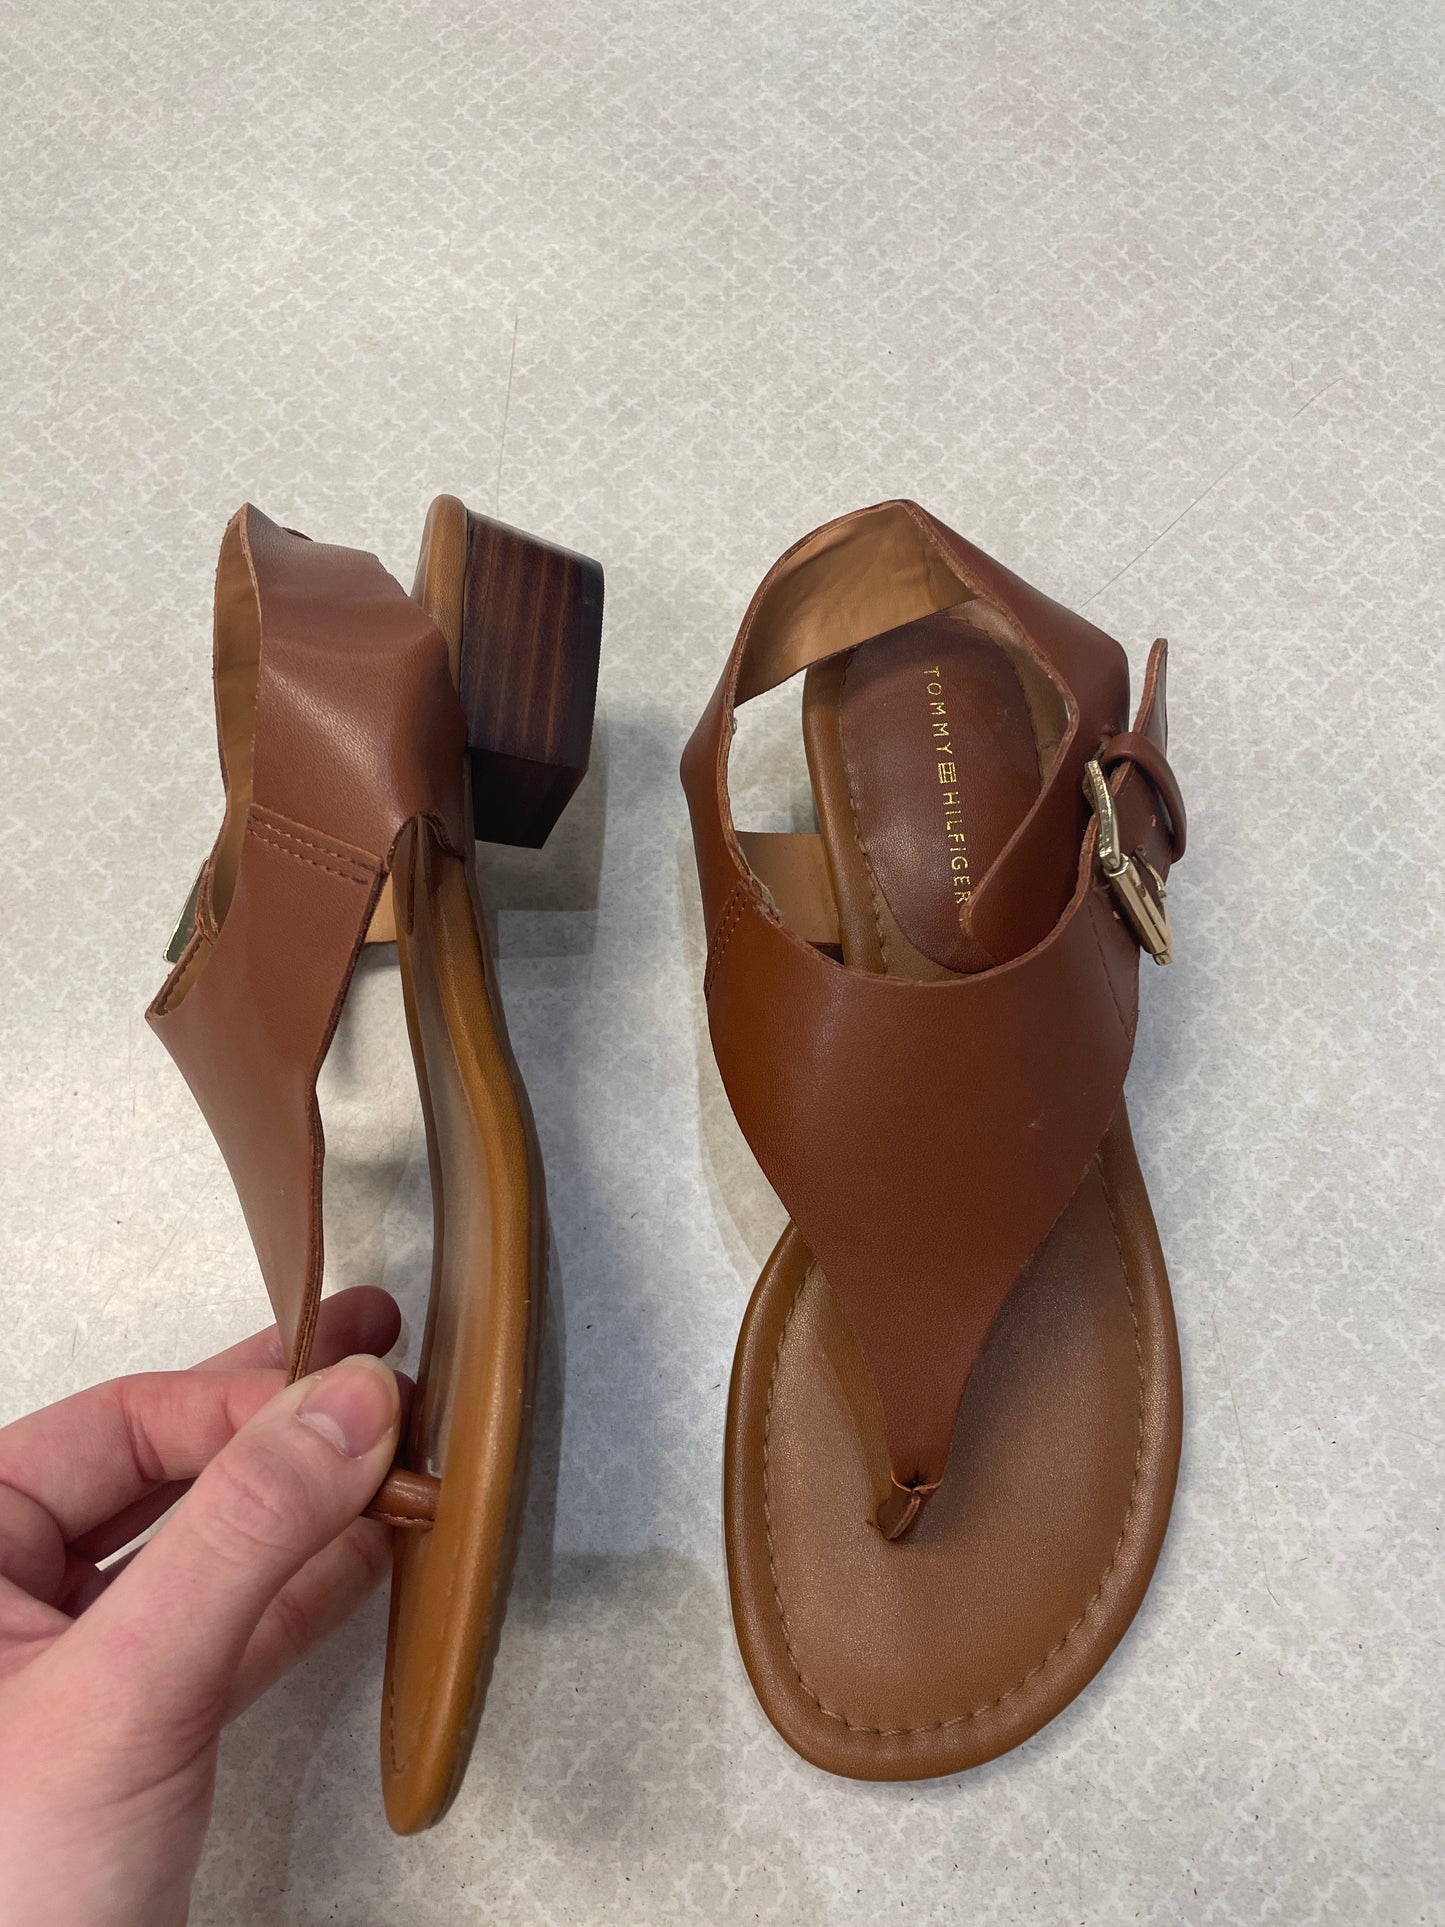 Sandals Heels Block By Tommy Hilfiger  Size: 6.5